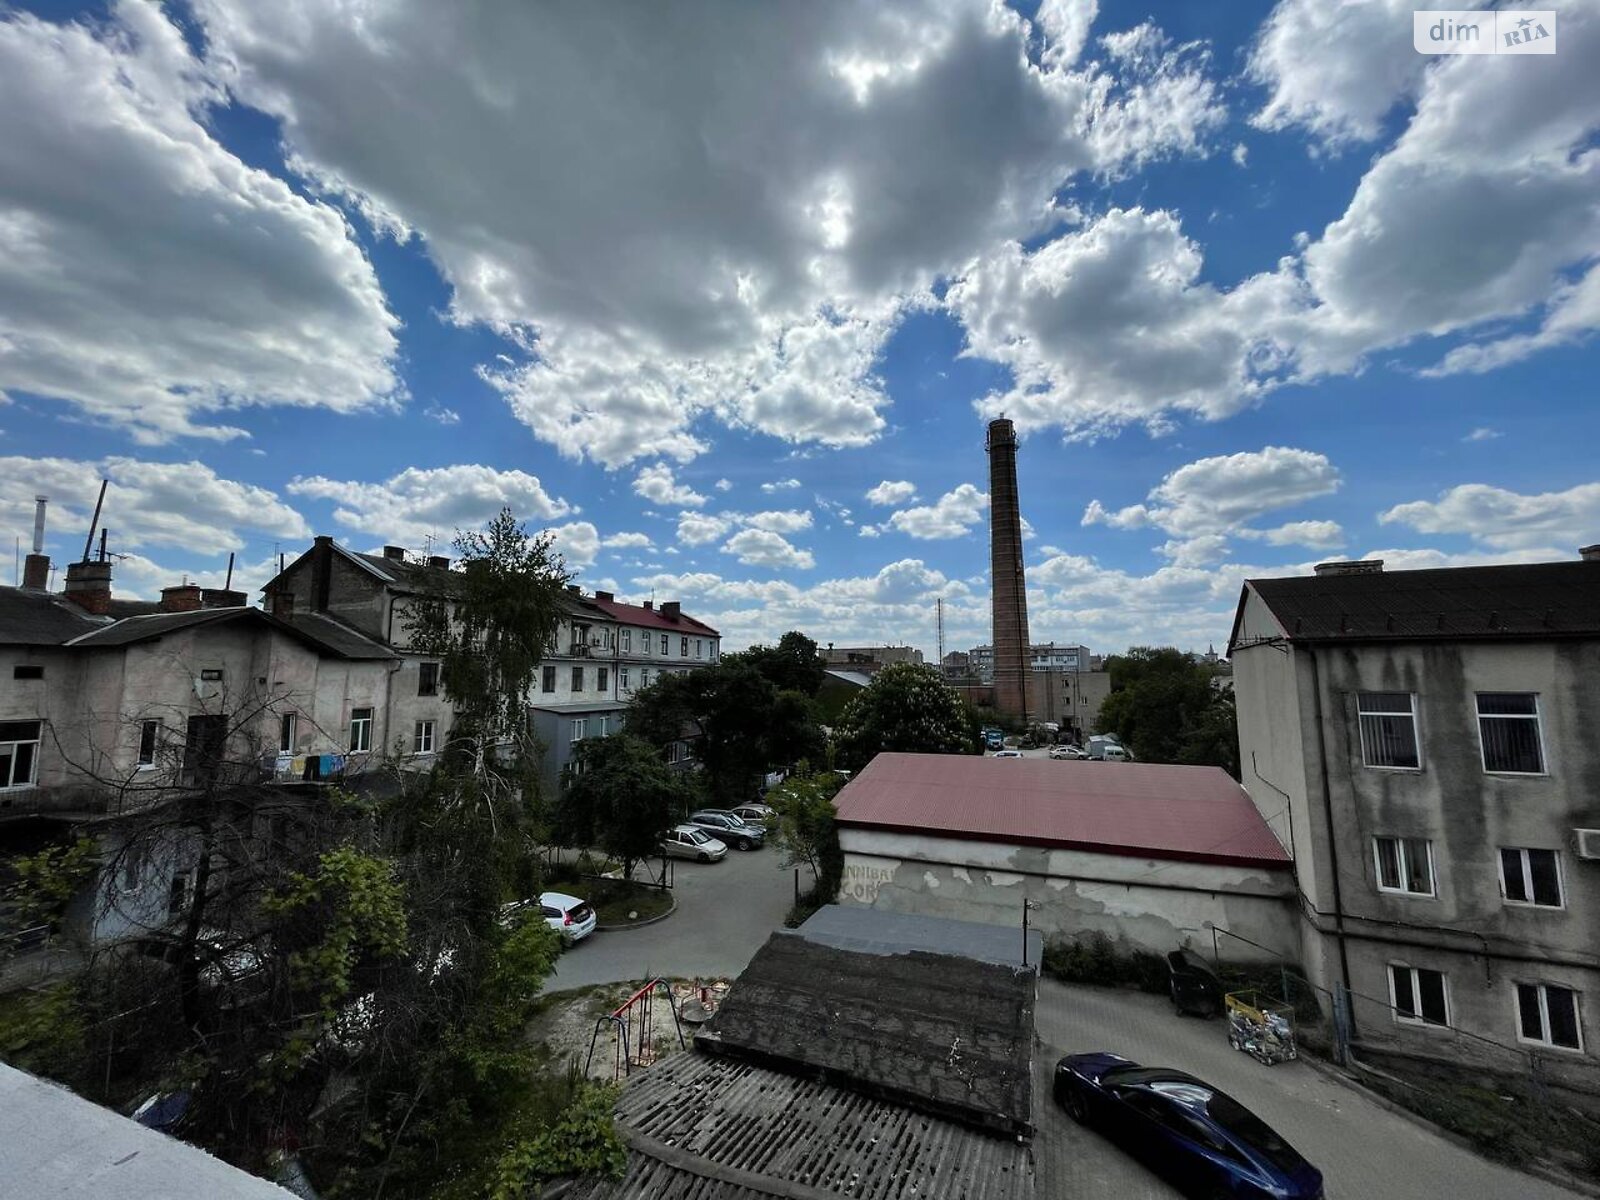 Продажа трехкомнатной квартиры в Тернополе, на ул. Качалы, район Центр фото 1